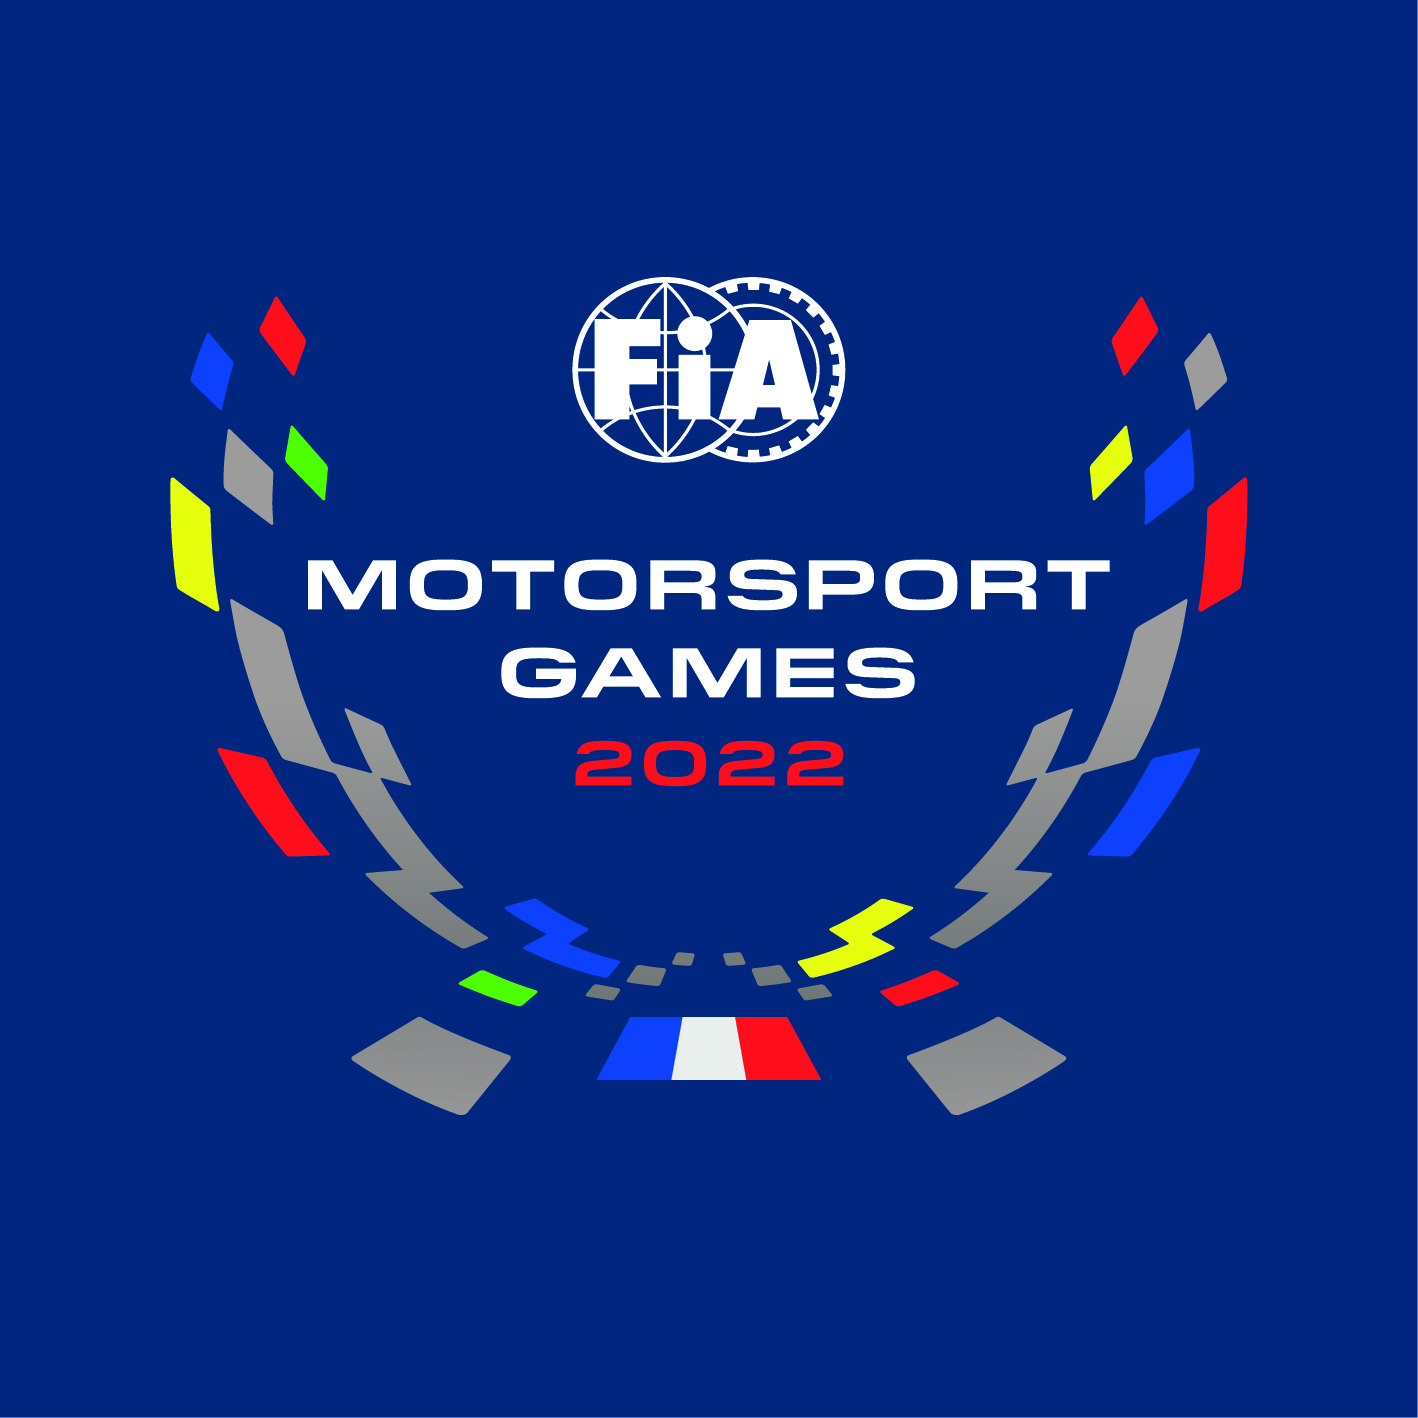 FIA DEFLOGO Motorsport Games 2022 CMYK NEG No Bkgrnd NO MARSEILLE